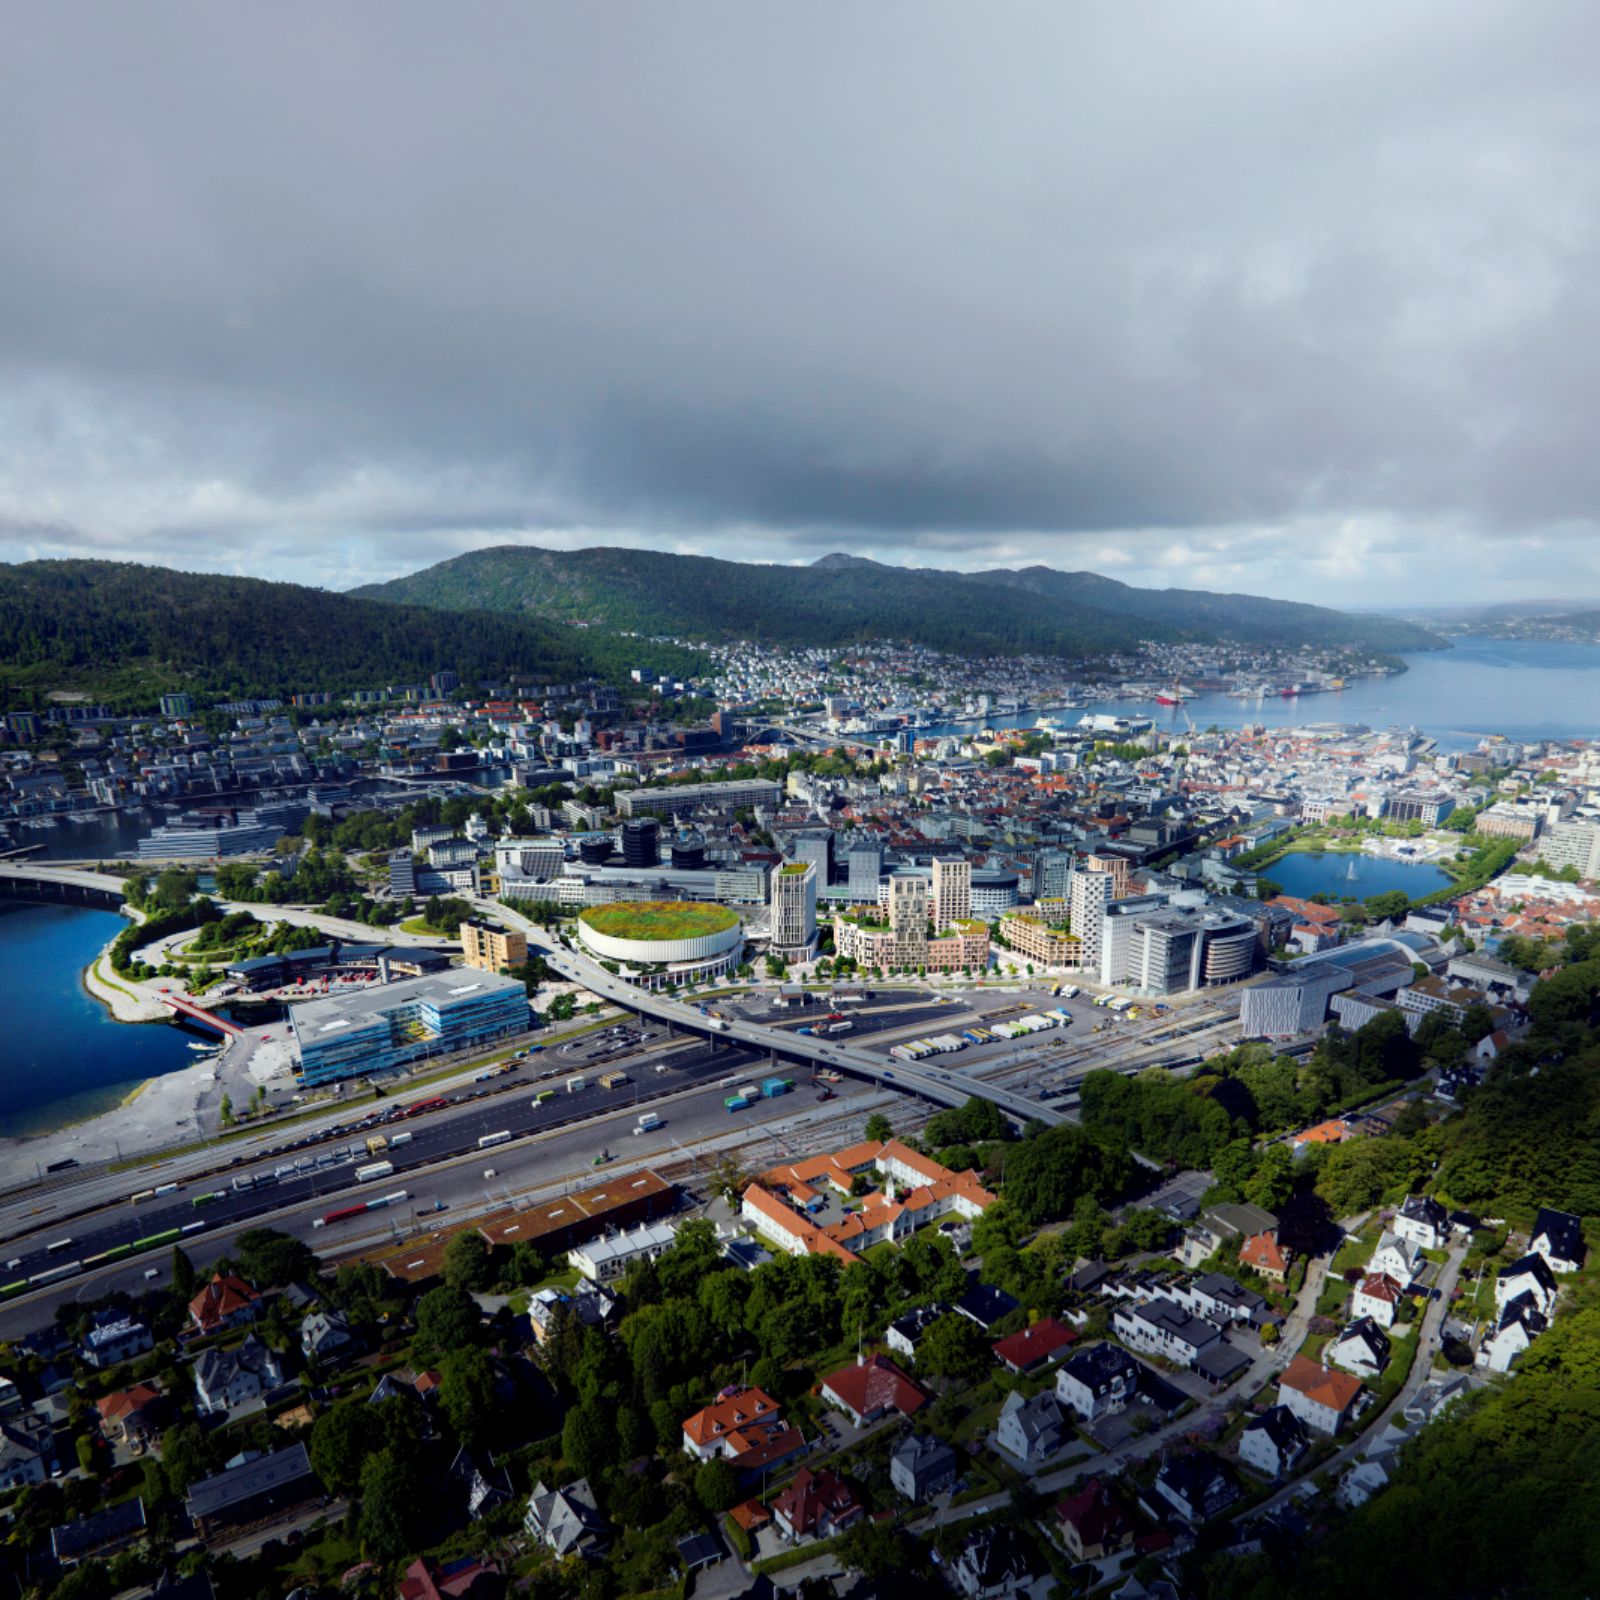 new multi-arena in Bergen